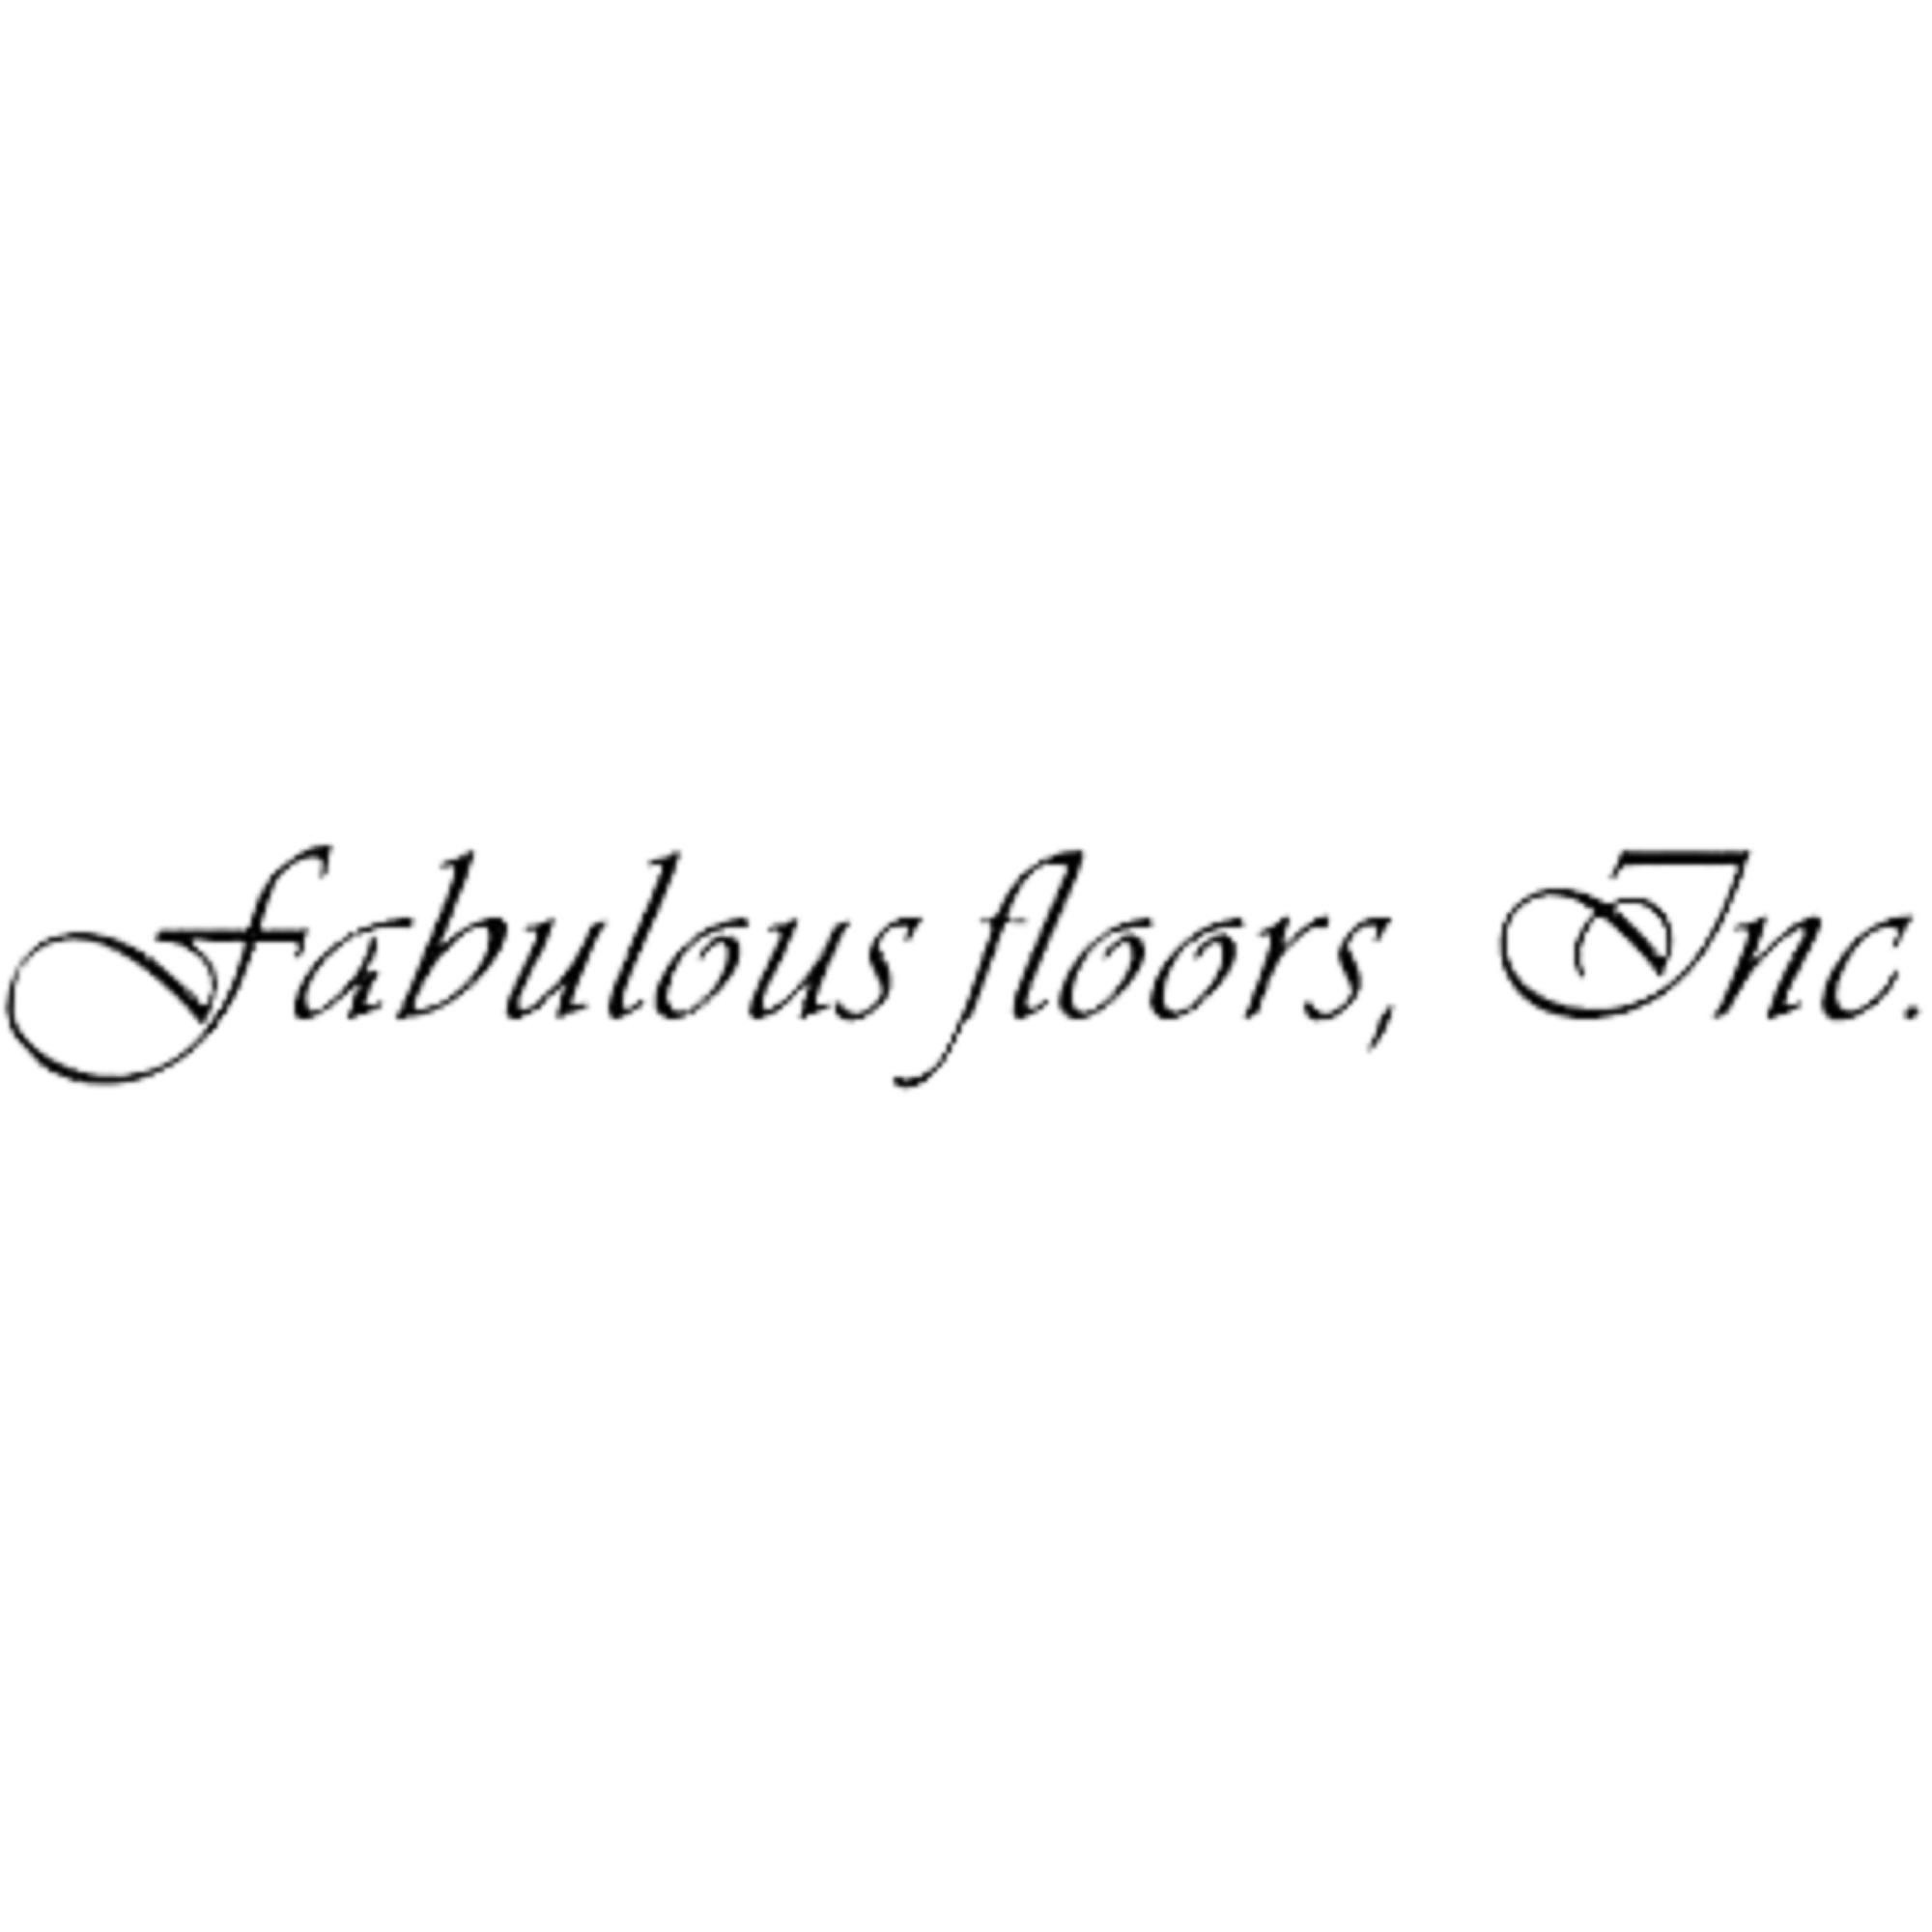 FABULOUS FLOORS, INC